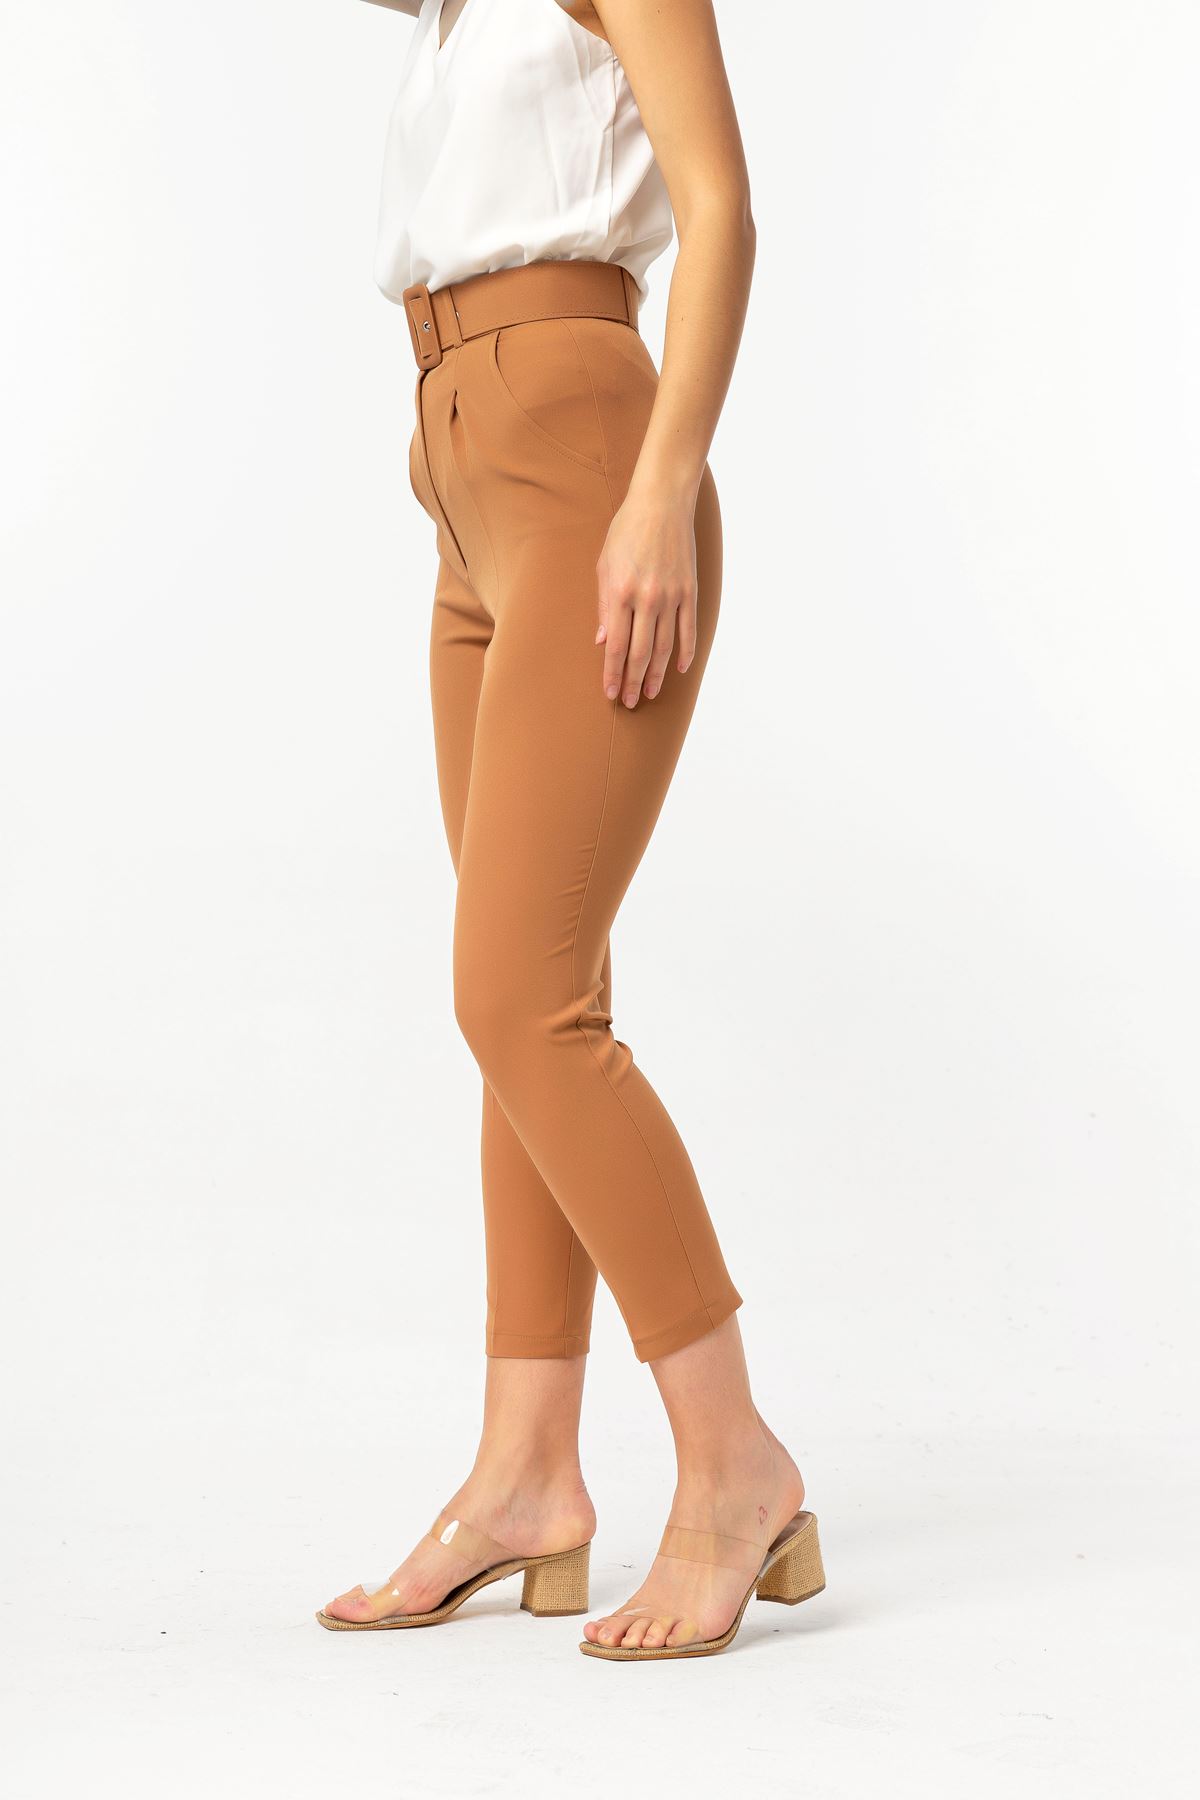 Atlas Fabric Ankle Length Women'S Trouser With Belt - Cinnamon 